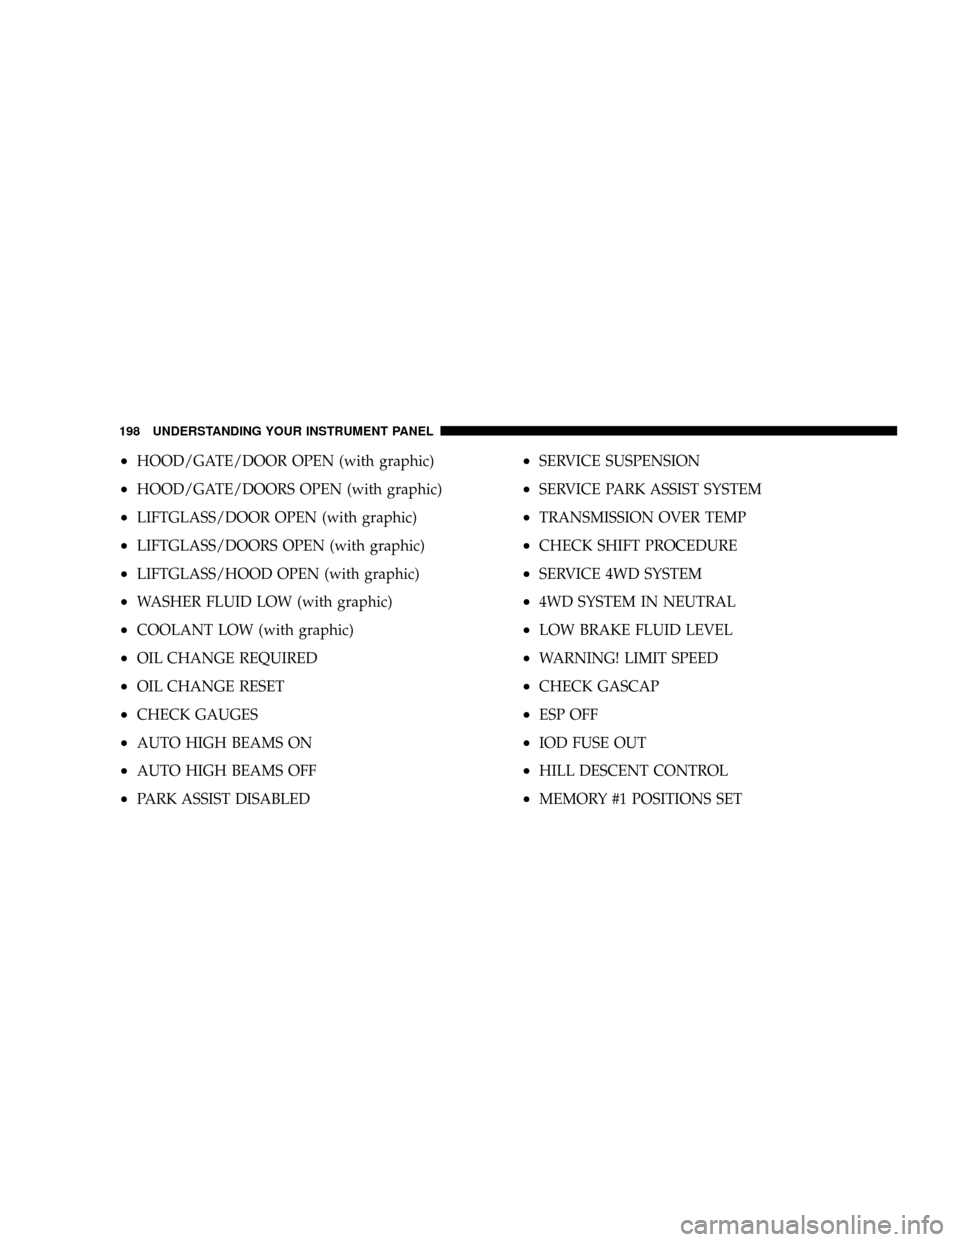 JEEP COMMANDER 2008 1.G Owners Manual ²HOOD/GATE/DOOR OPEN (with graphic)
²HOOD/GATE/DOORS OPEN (with graphic)
²LIFTGLASS/DOOR OPEN (with graphic)
²LIFTGLASS/DOORS OPEN (with graphic)
²LIFTGLASS/HOOD OPEN (with graphic)
²WASHER FLUI